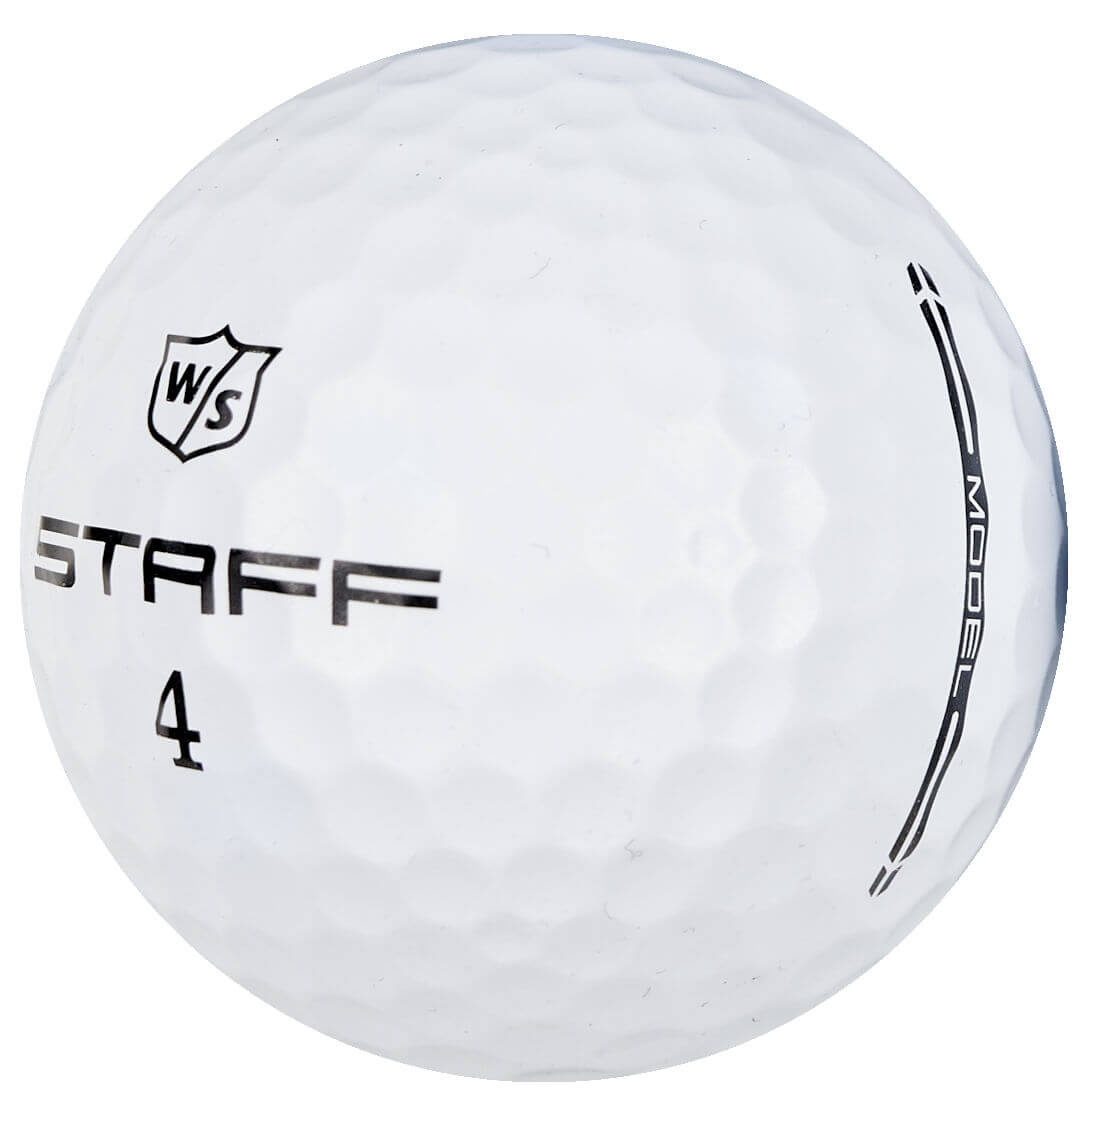 Wilson Staff Model Golfbälle, white